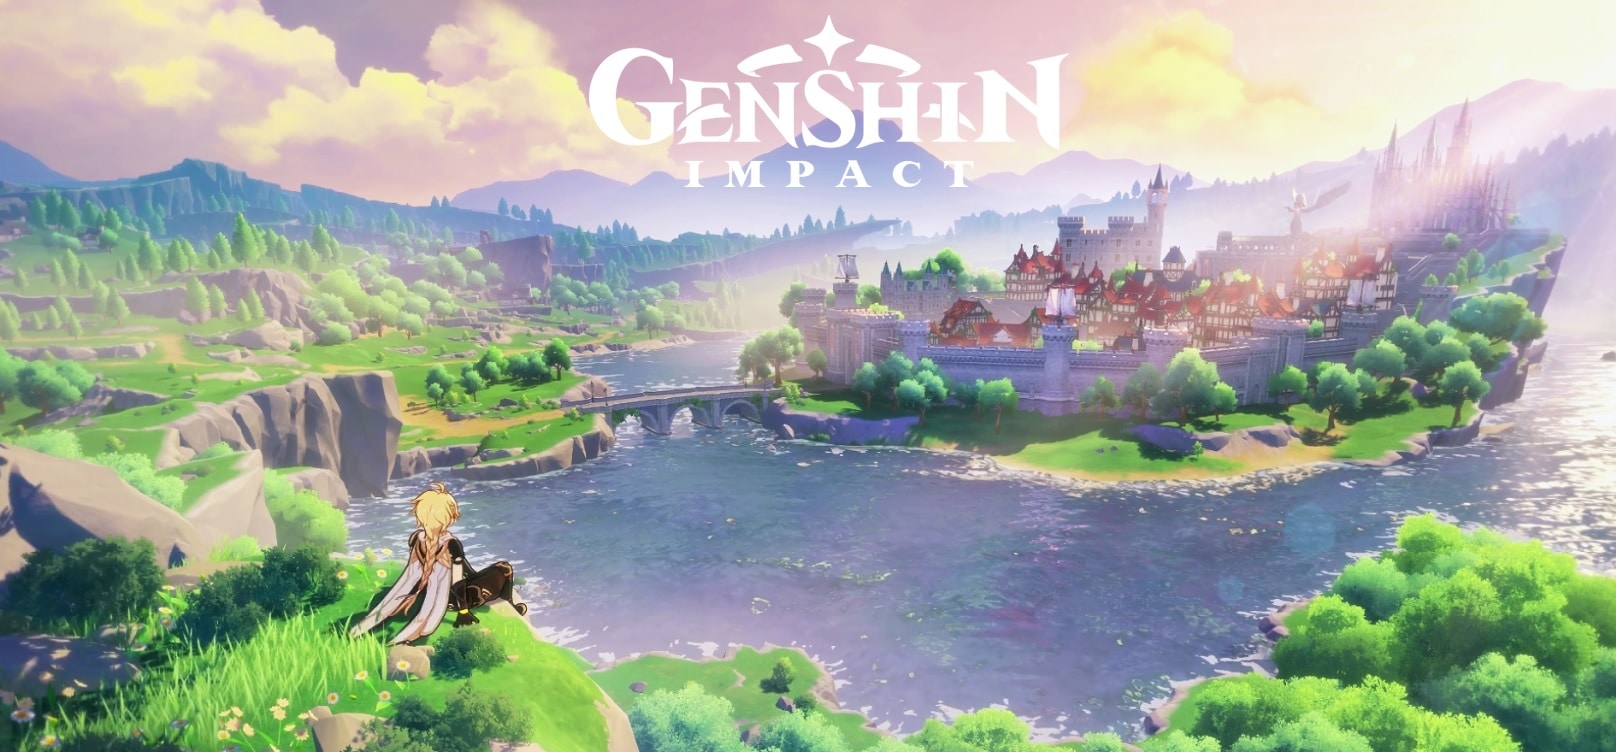 Genshin Impact เกมใหม่จากผู้สร้าง Honkai Impact 3 จะเปิดทดสอบปลายเดือนนี้